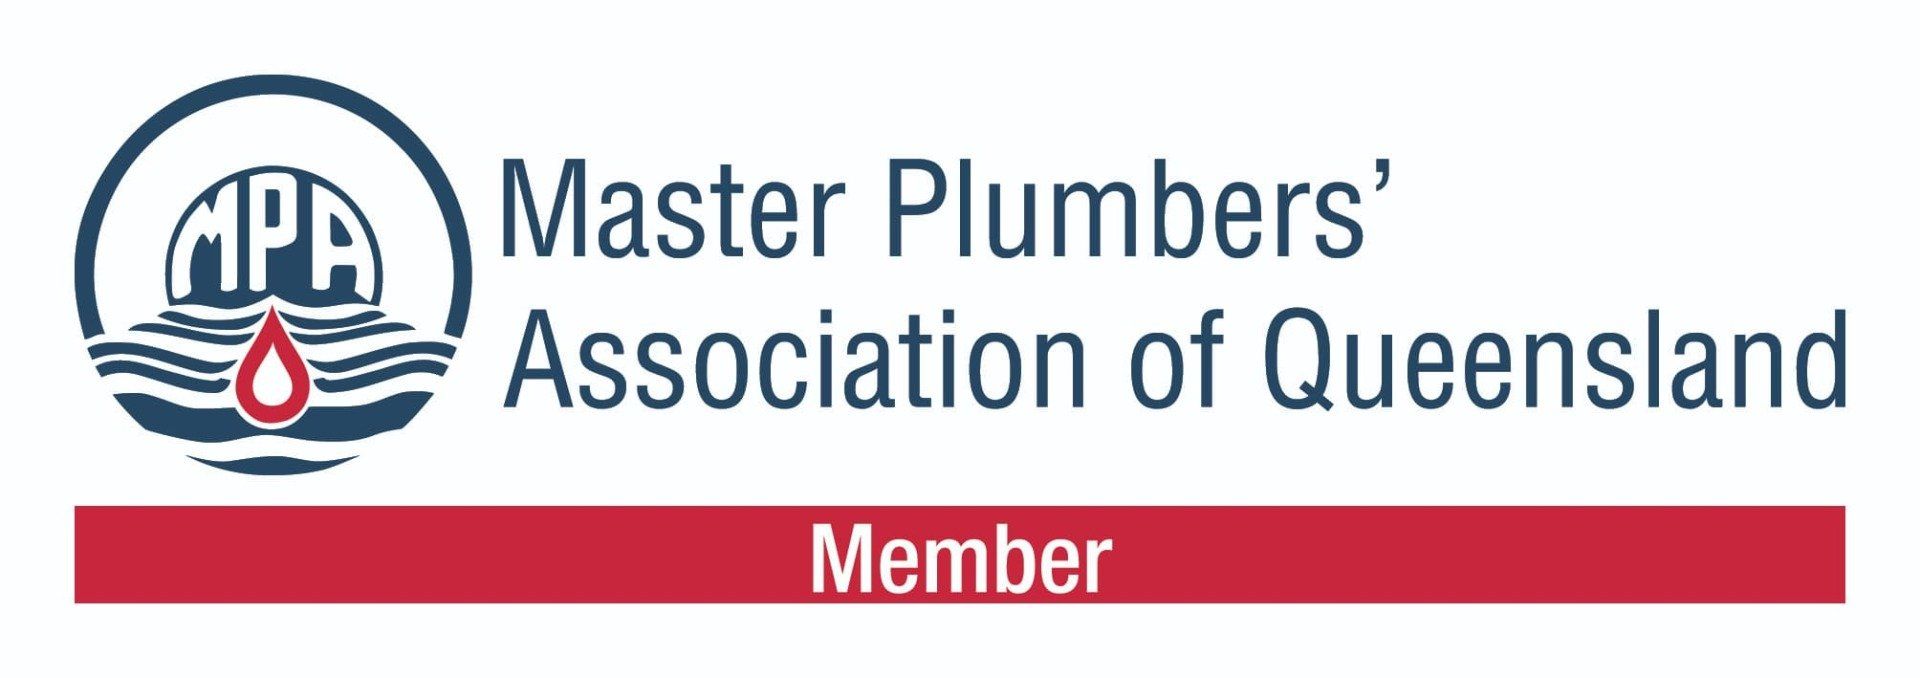 Master Plumbers' Association Of Queensland Member